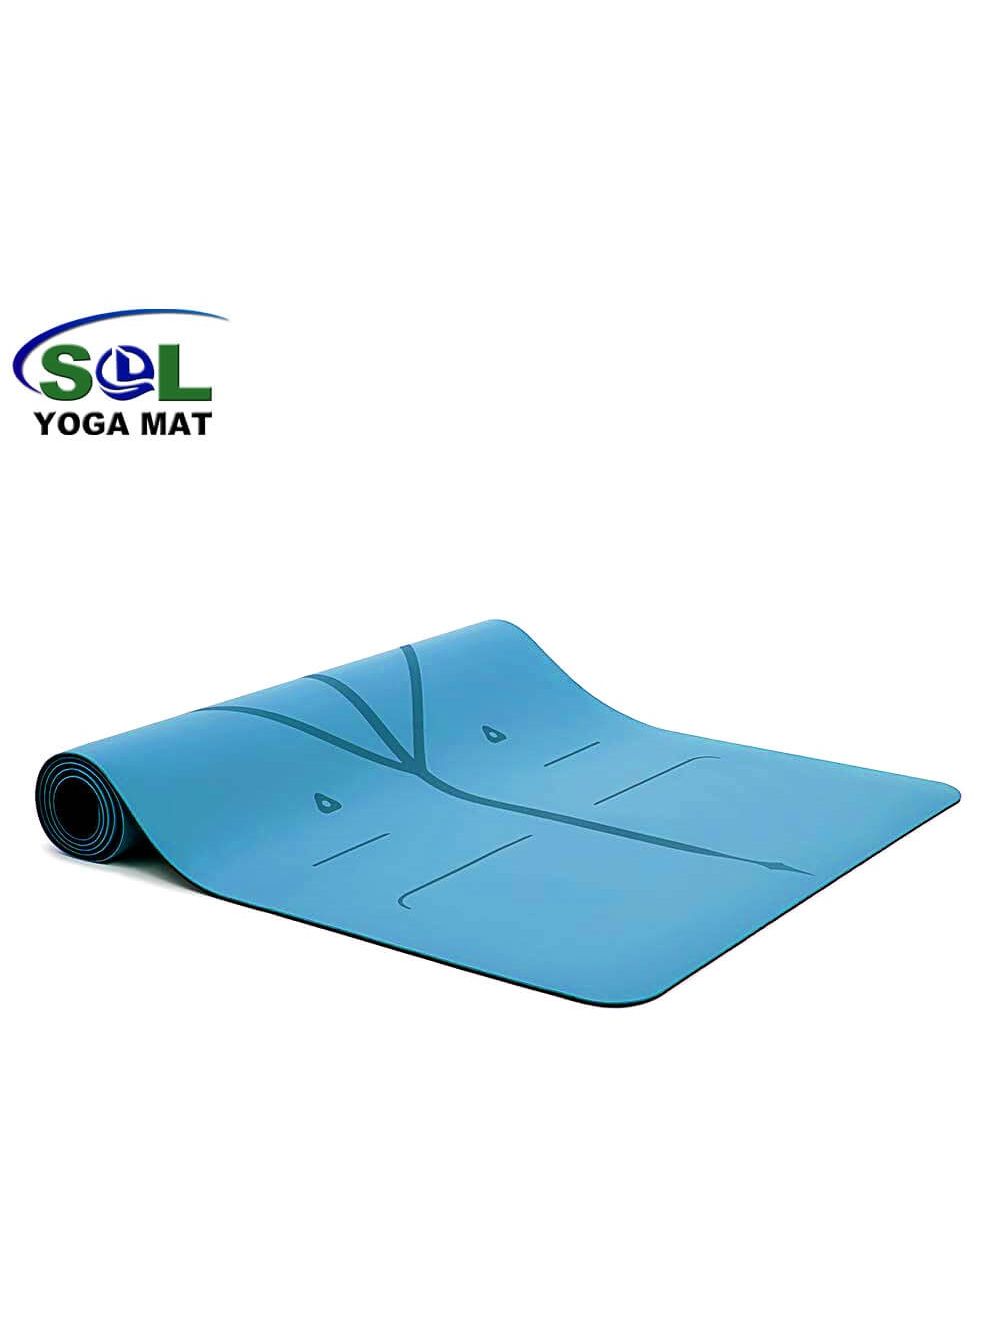 4mm Non Slip PU surface Natural Rubber yoga mat